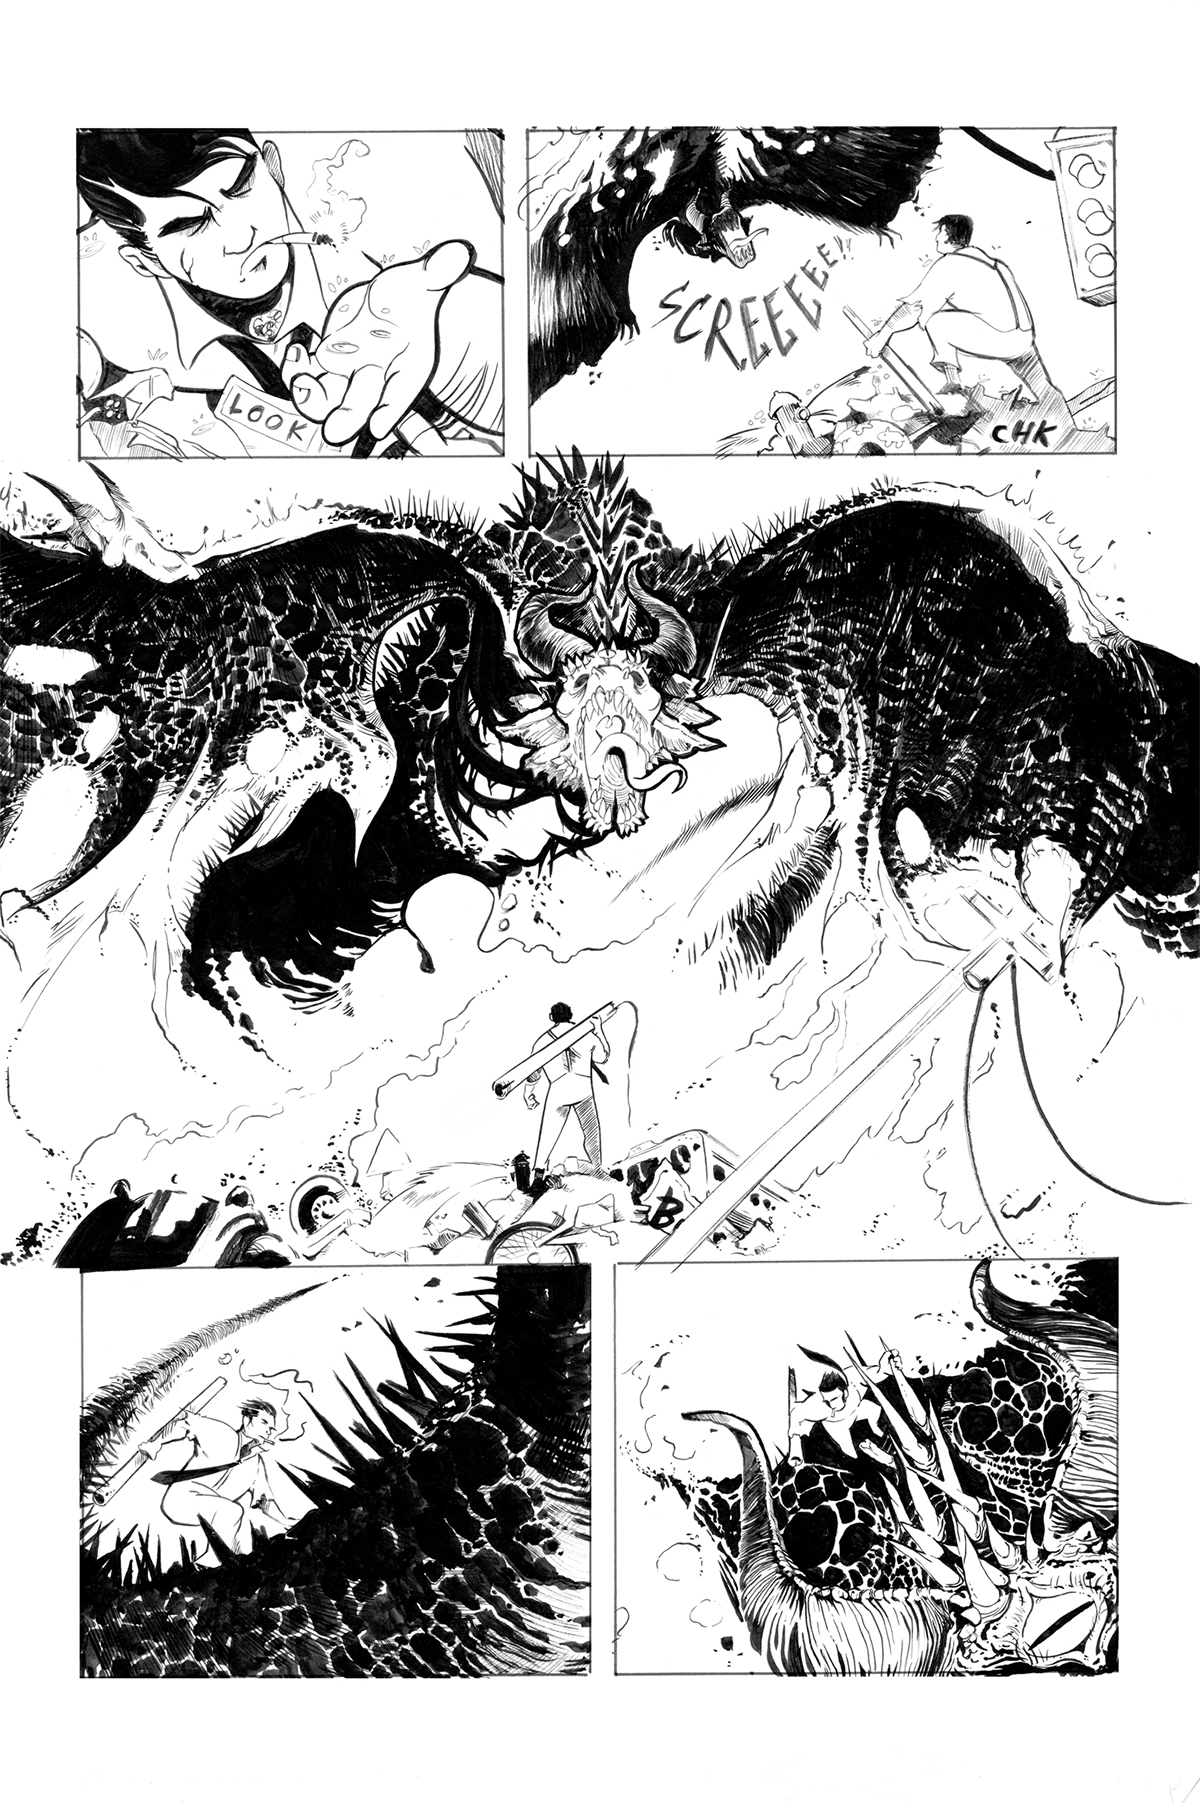 Hunter Quaid  dark horse  comics  publication  superheroes  time-travel  fantasy  layout  branding  character  comic books  Books